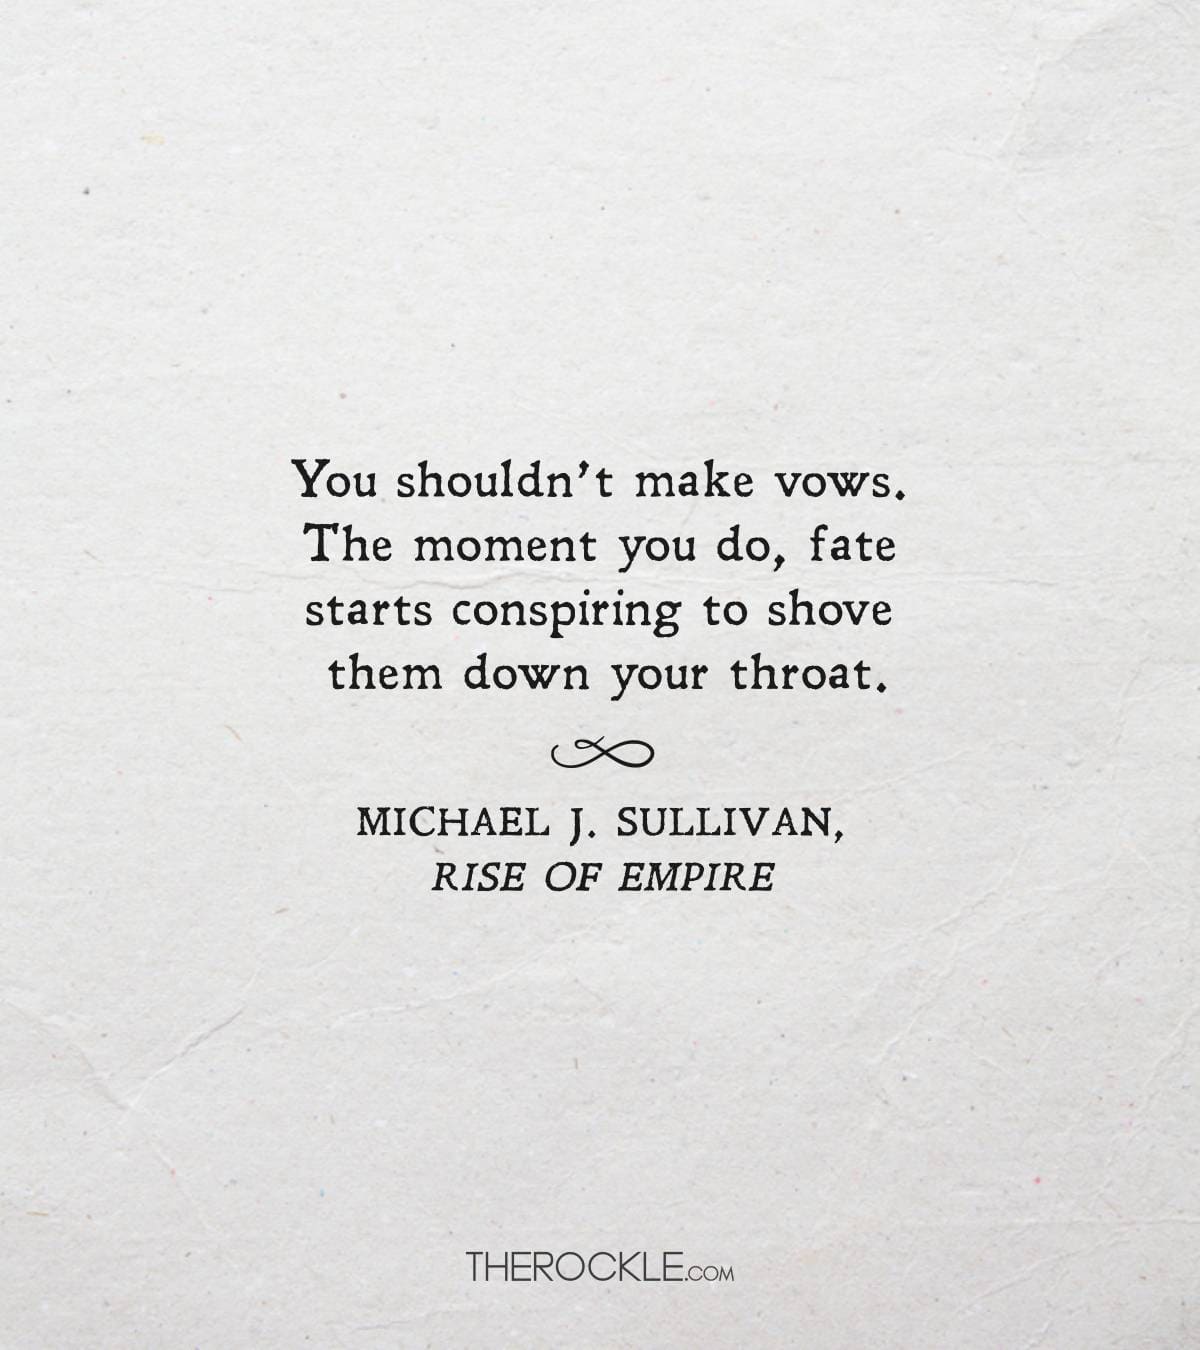 Funny quote from Michael J. Sullivan's Rise of Empire book